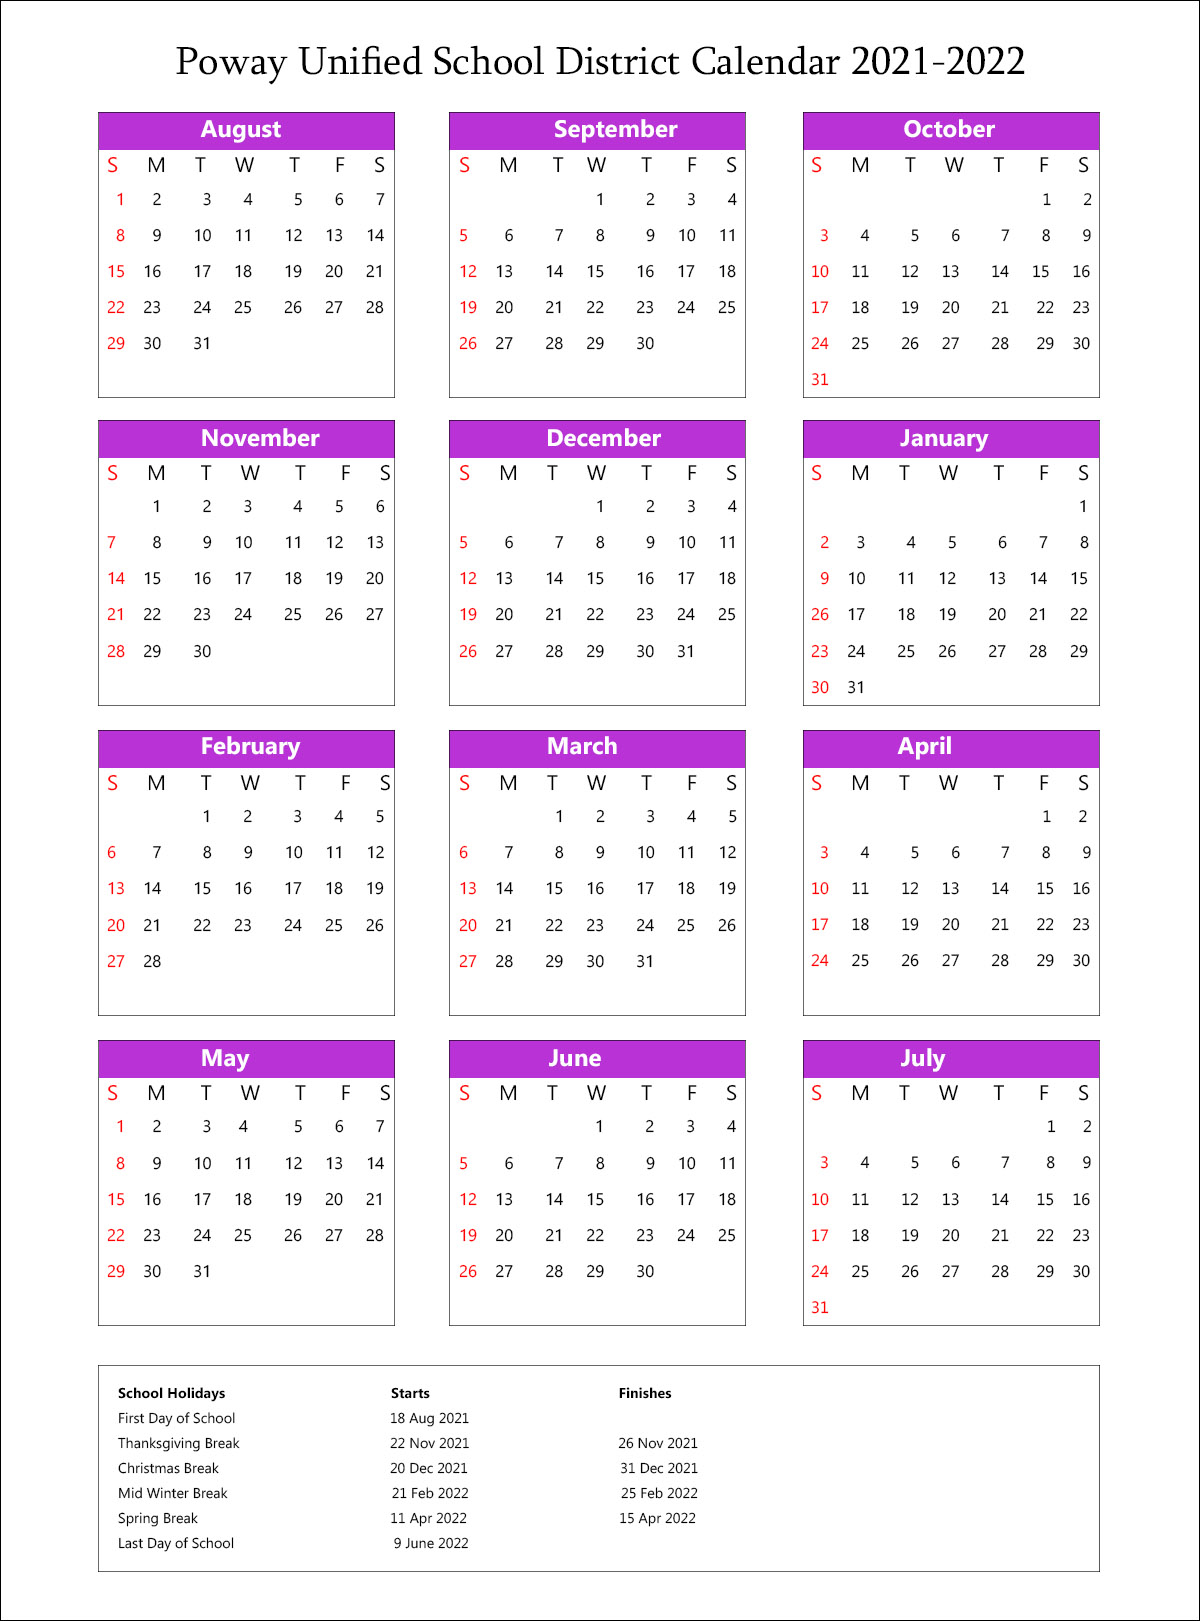 Poway Unified School District, California Calendar Holidays 2021